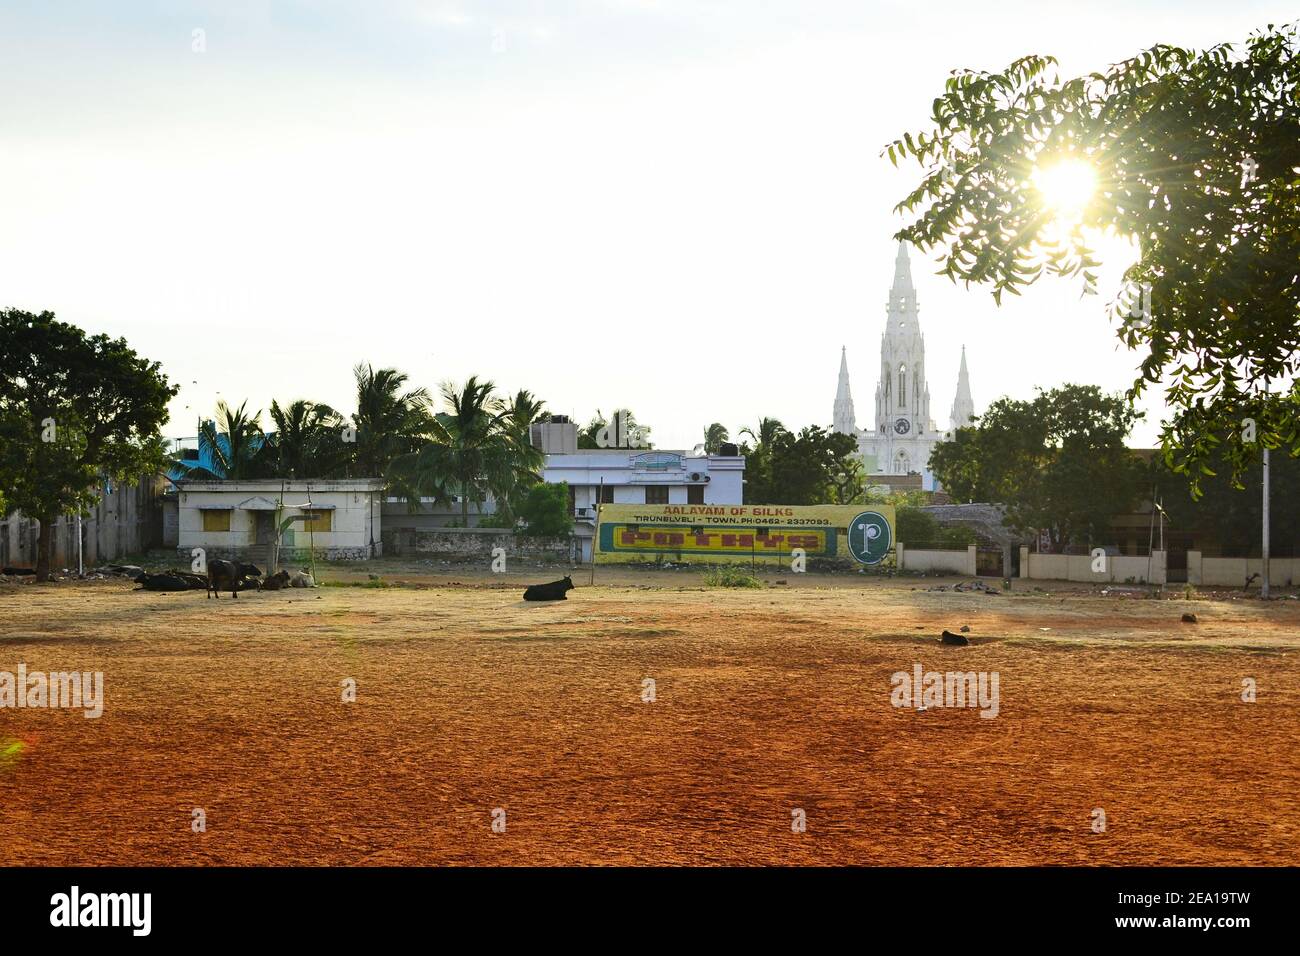 Kanyakumari, Tamil Nadu, India - January, 2017: Cows lies on orange dirt in a park. Old catholic church on the background. Sun shining trough leaves o Stock Photo